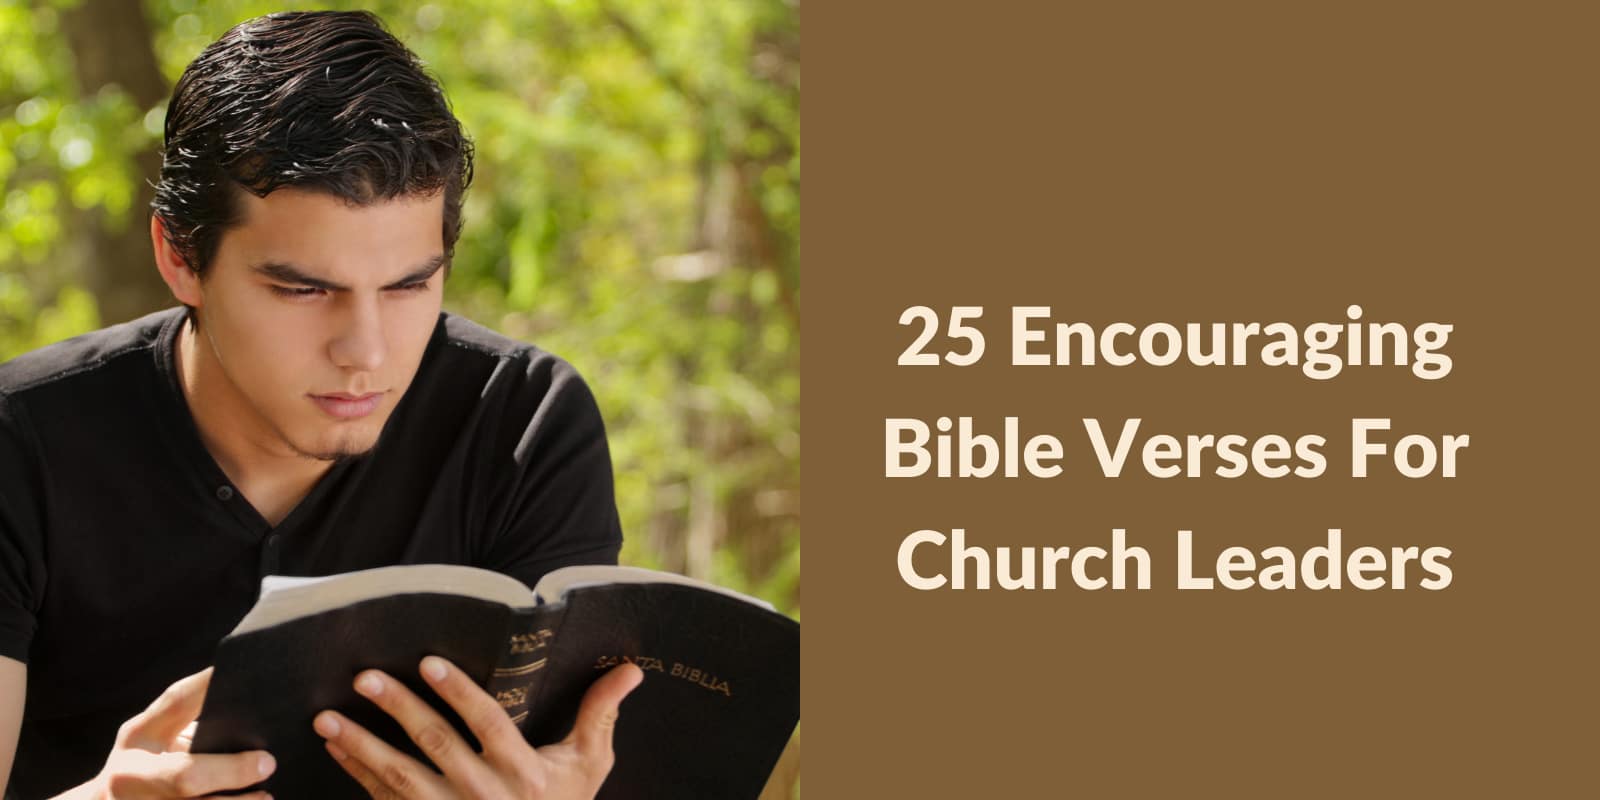 30 Encouraging Bible Verses - Scripture About Encouragement